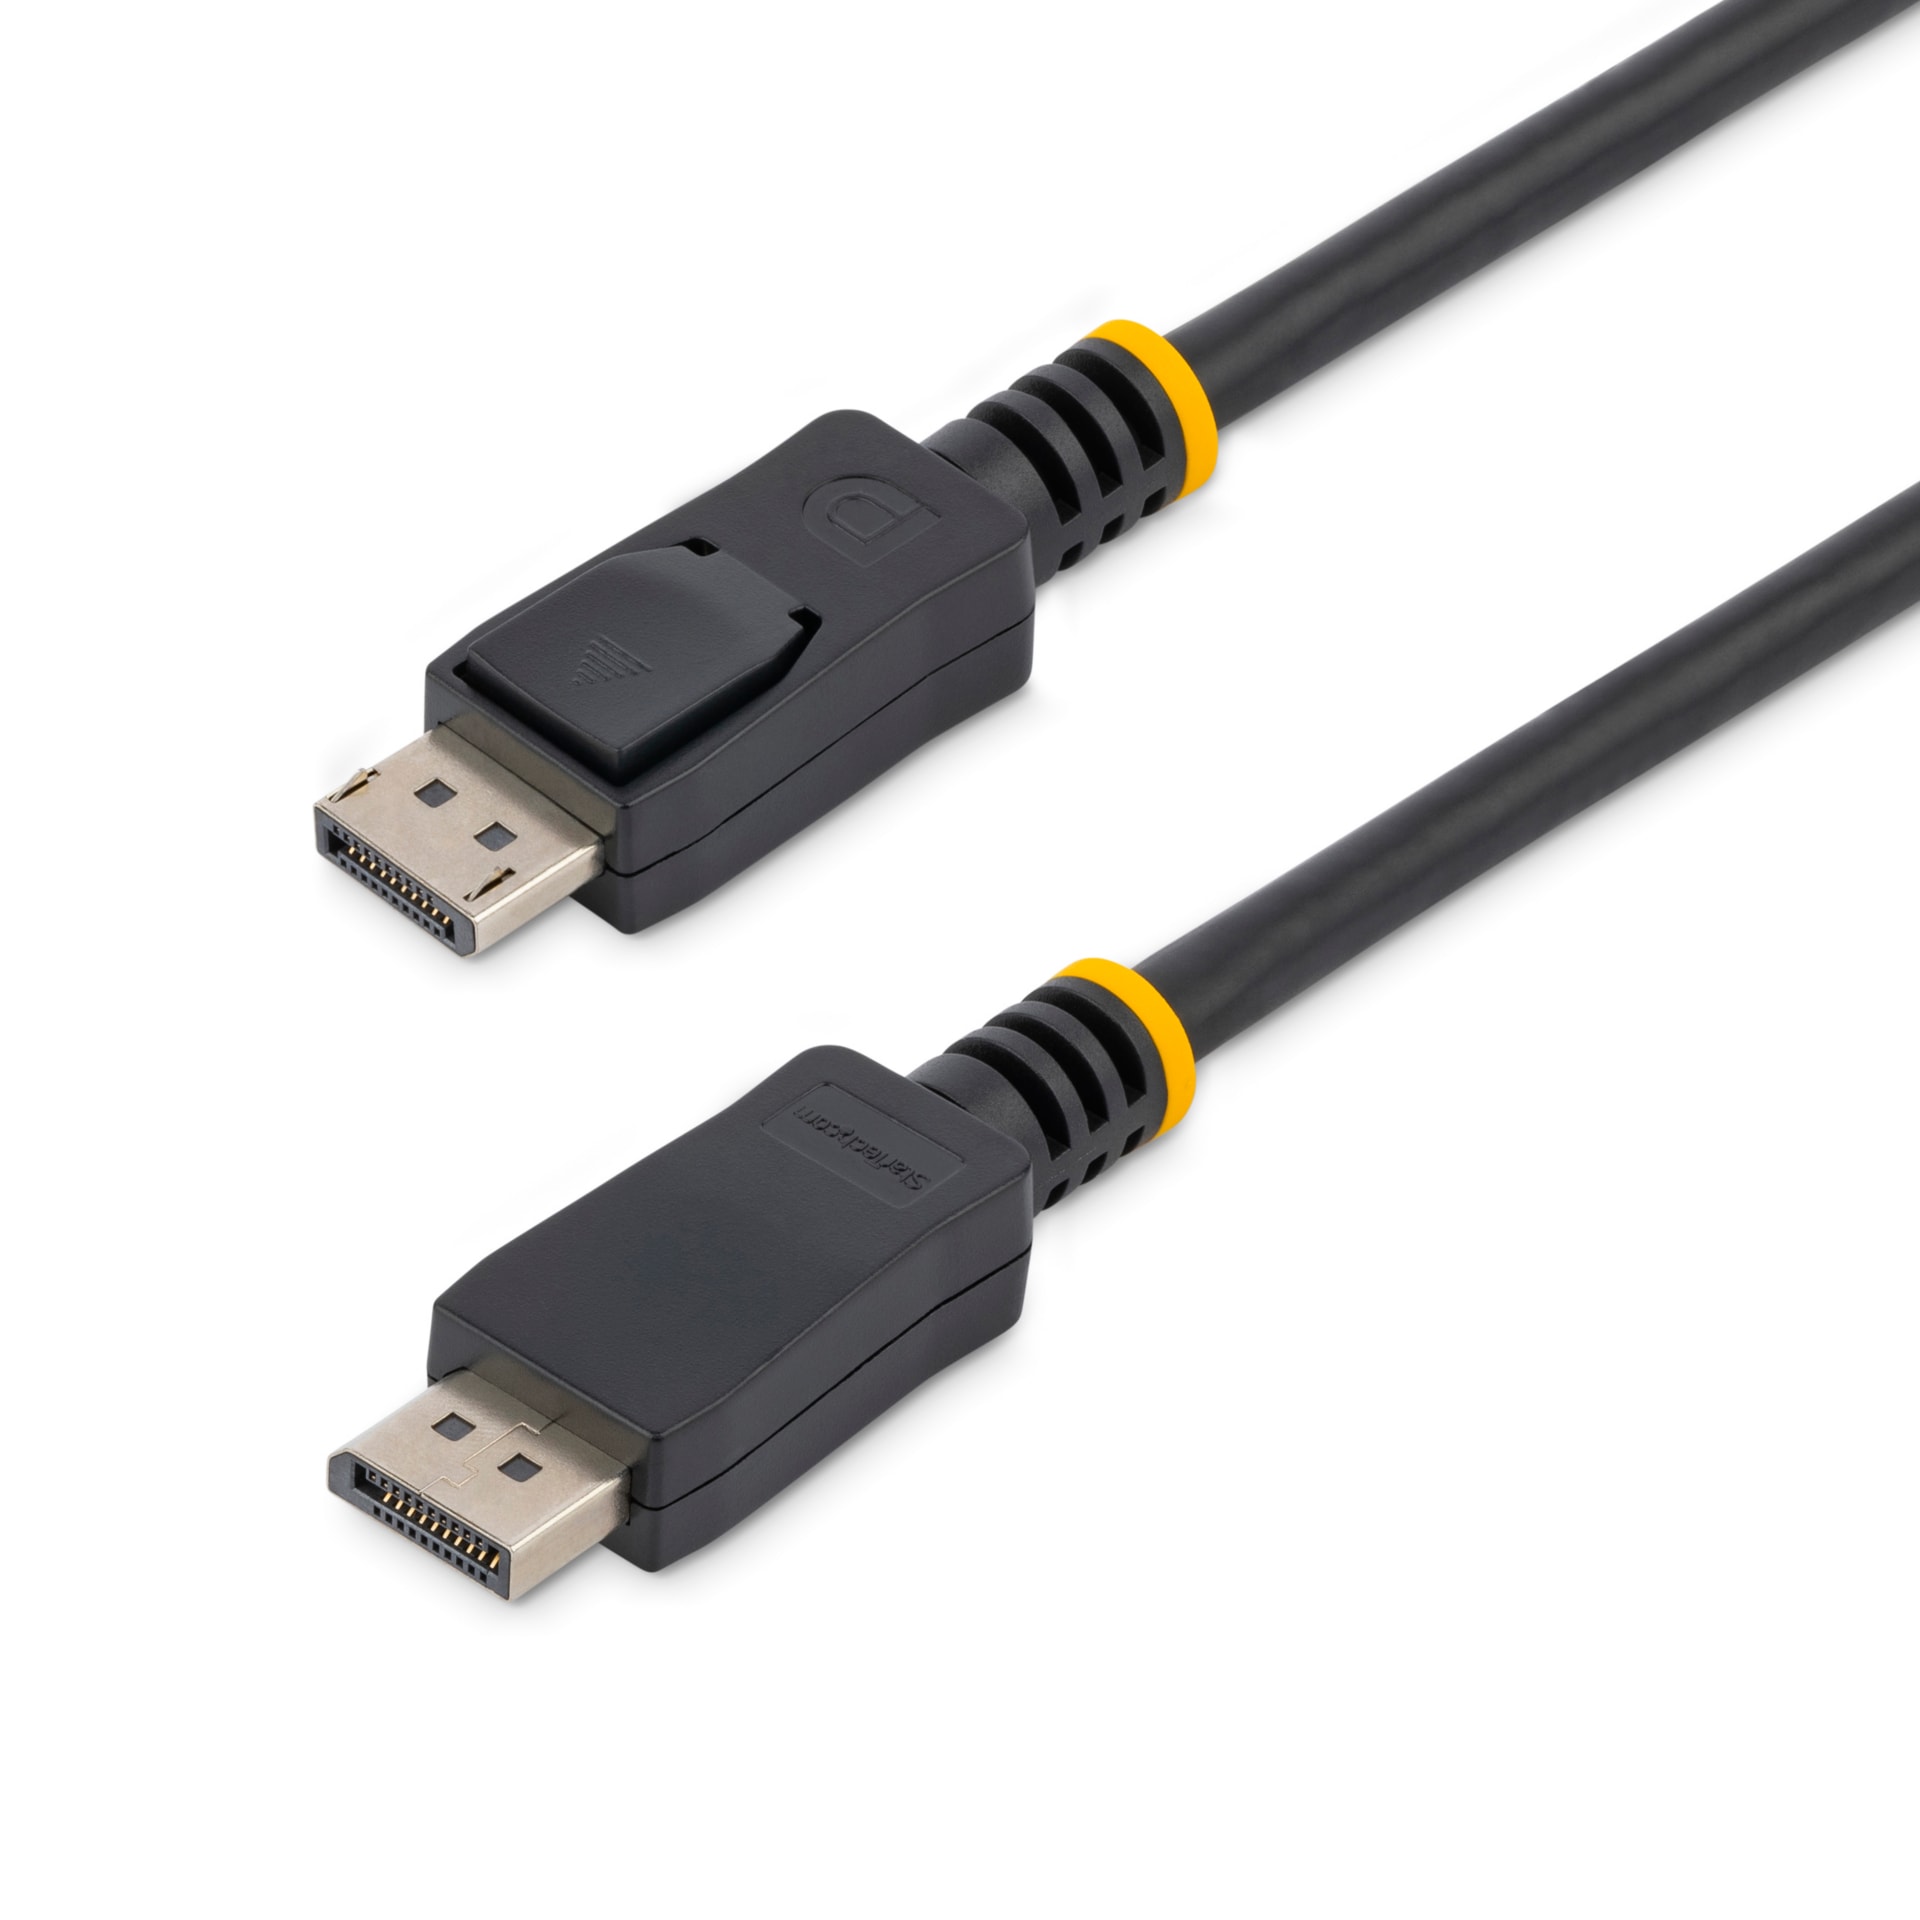 StarTech.com 10' VESA Certified DisplayPort 1.2 Cable w/Latches, DP 4K x 2K